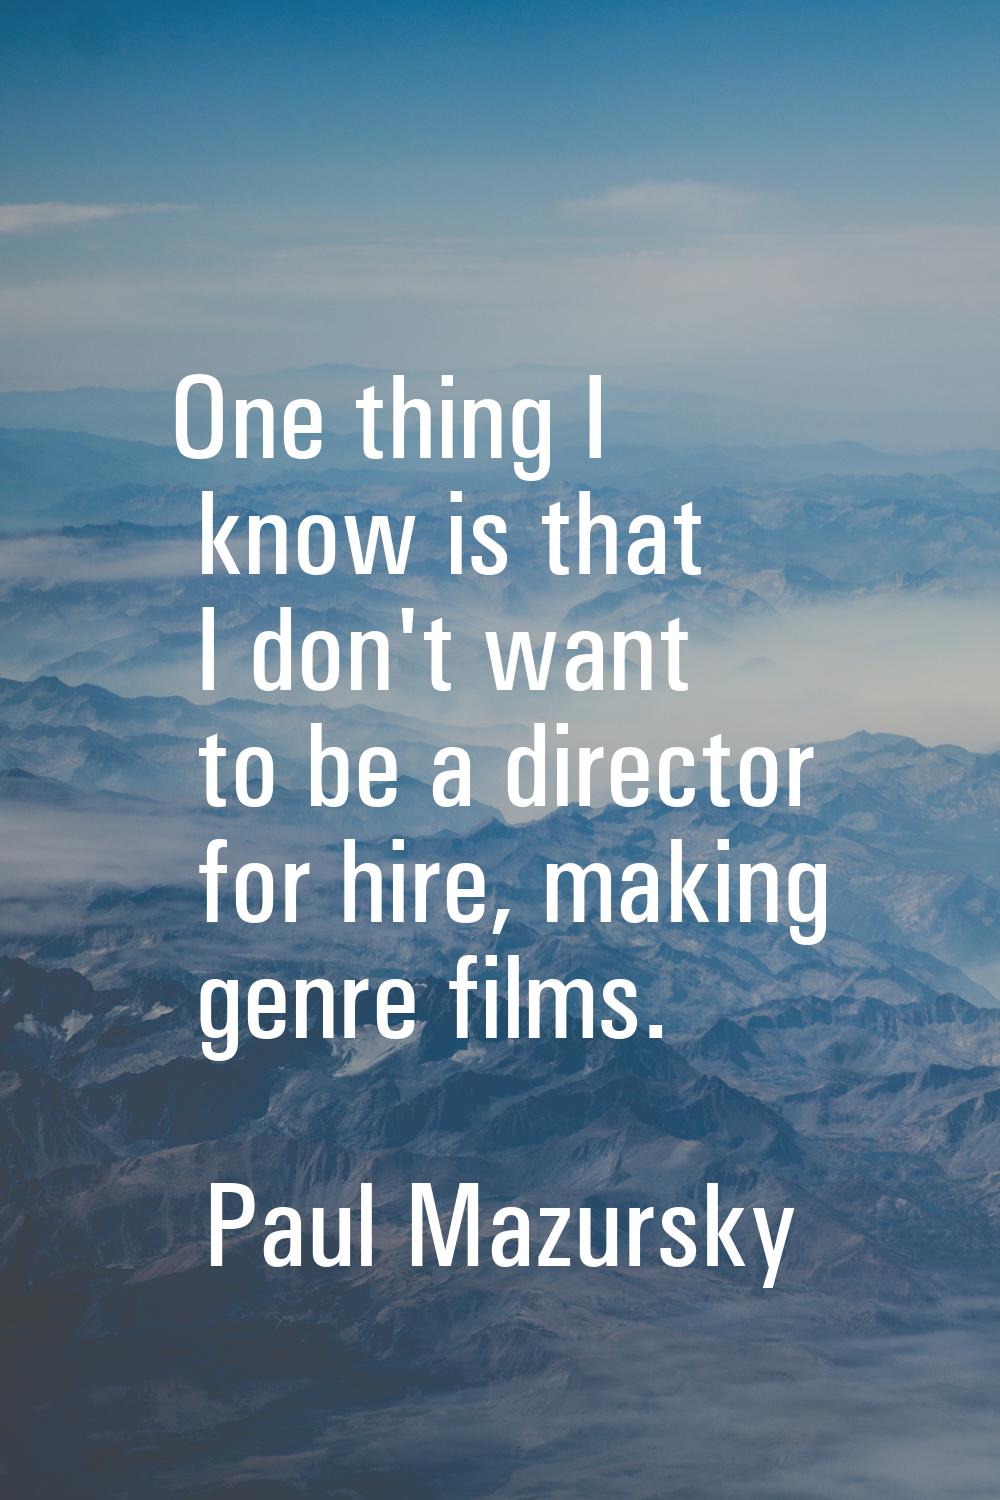 One thing I know is that I don't want to be a director for hire, making genre films.